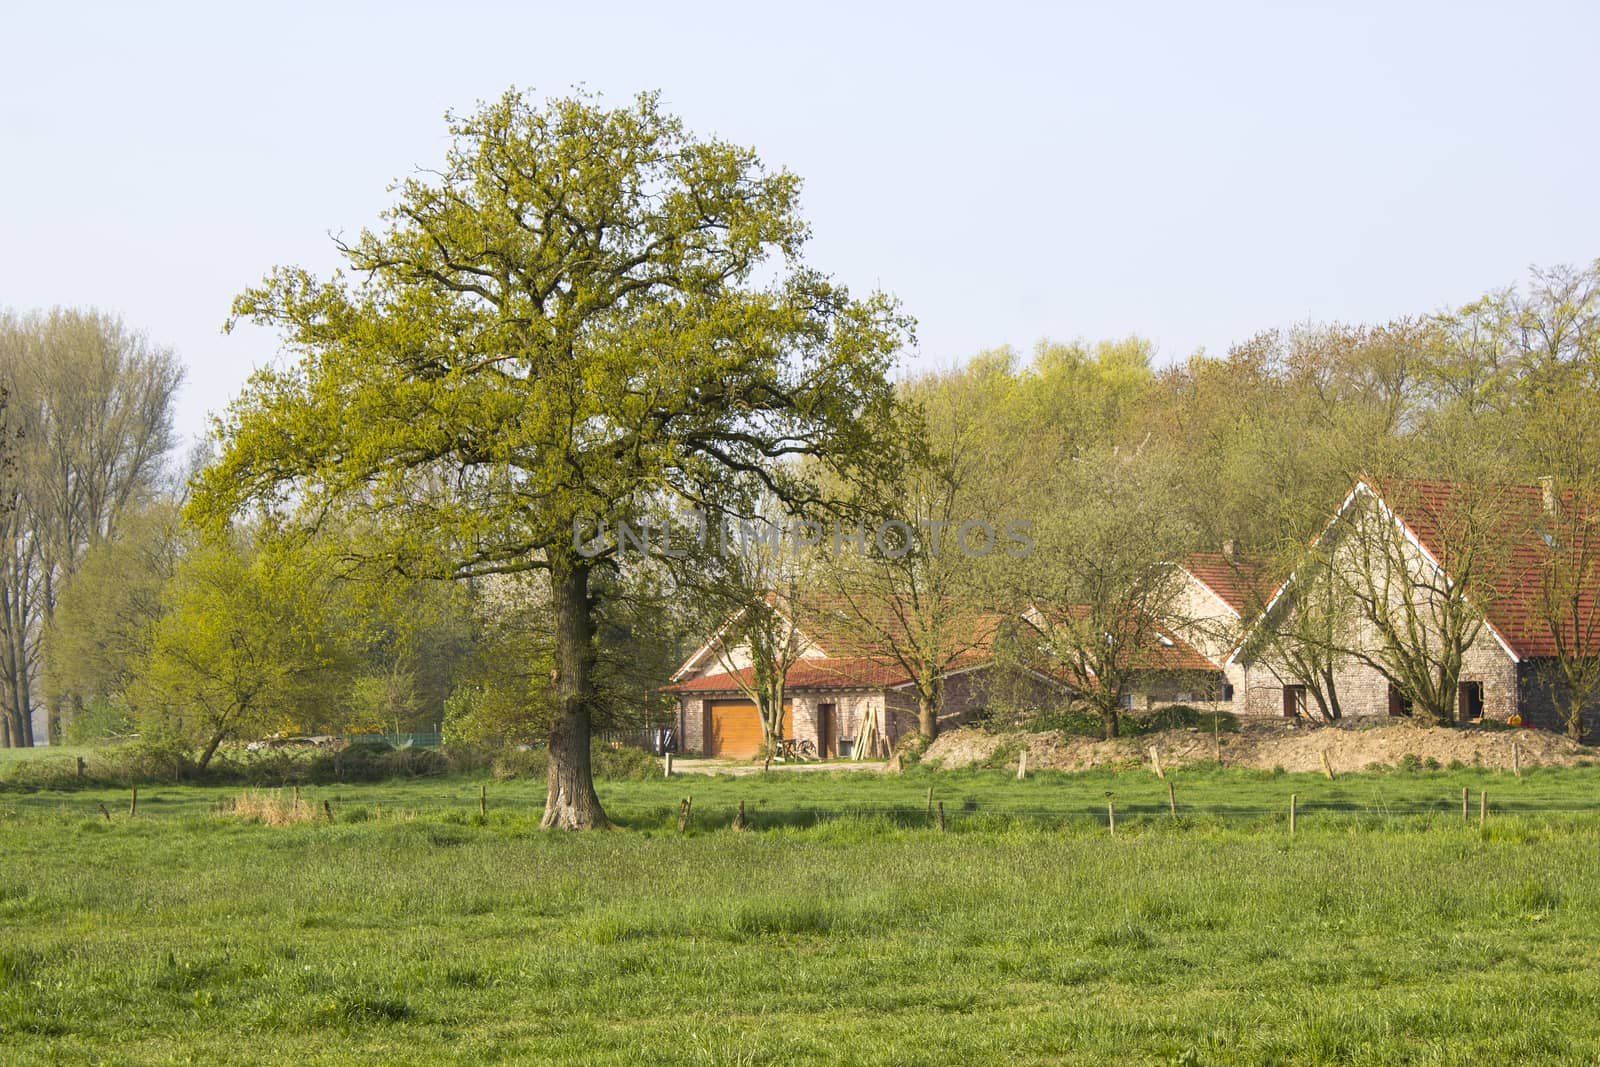 German countryside landscape by miradrozdowski